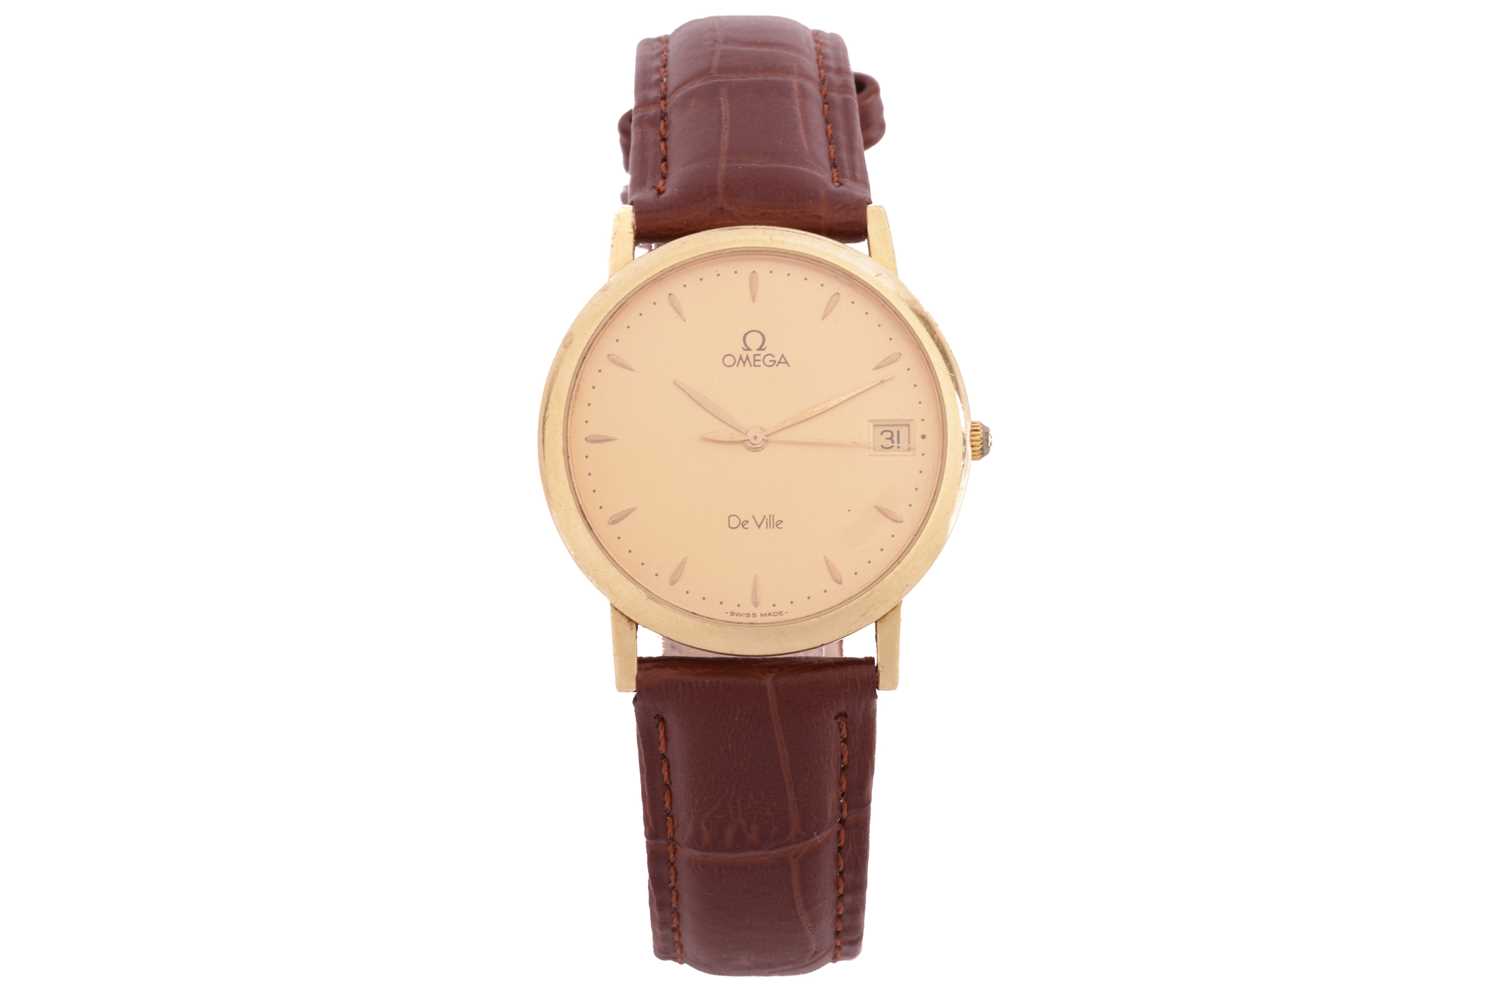 An Omega De Ville 18ct gold dress watch. Model: 196.2432 Serial: 54272728 Year: 1993 Case Material: 